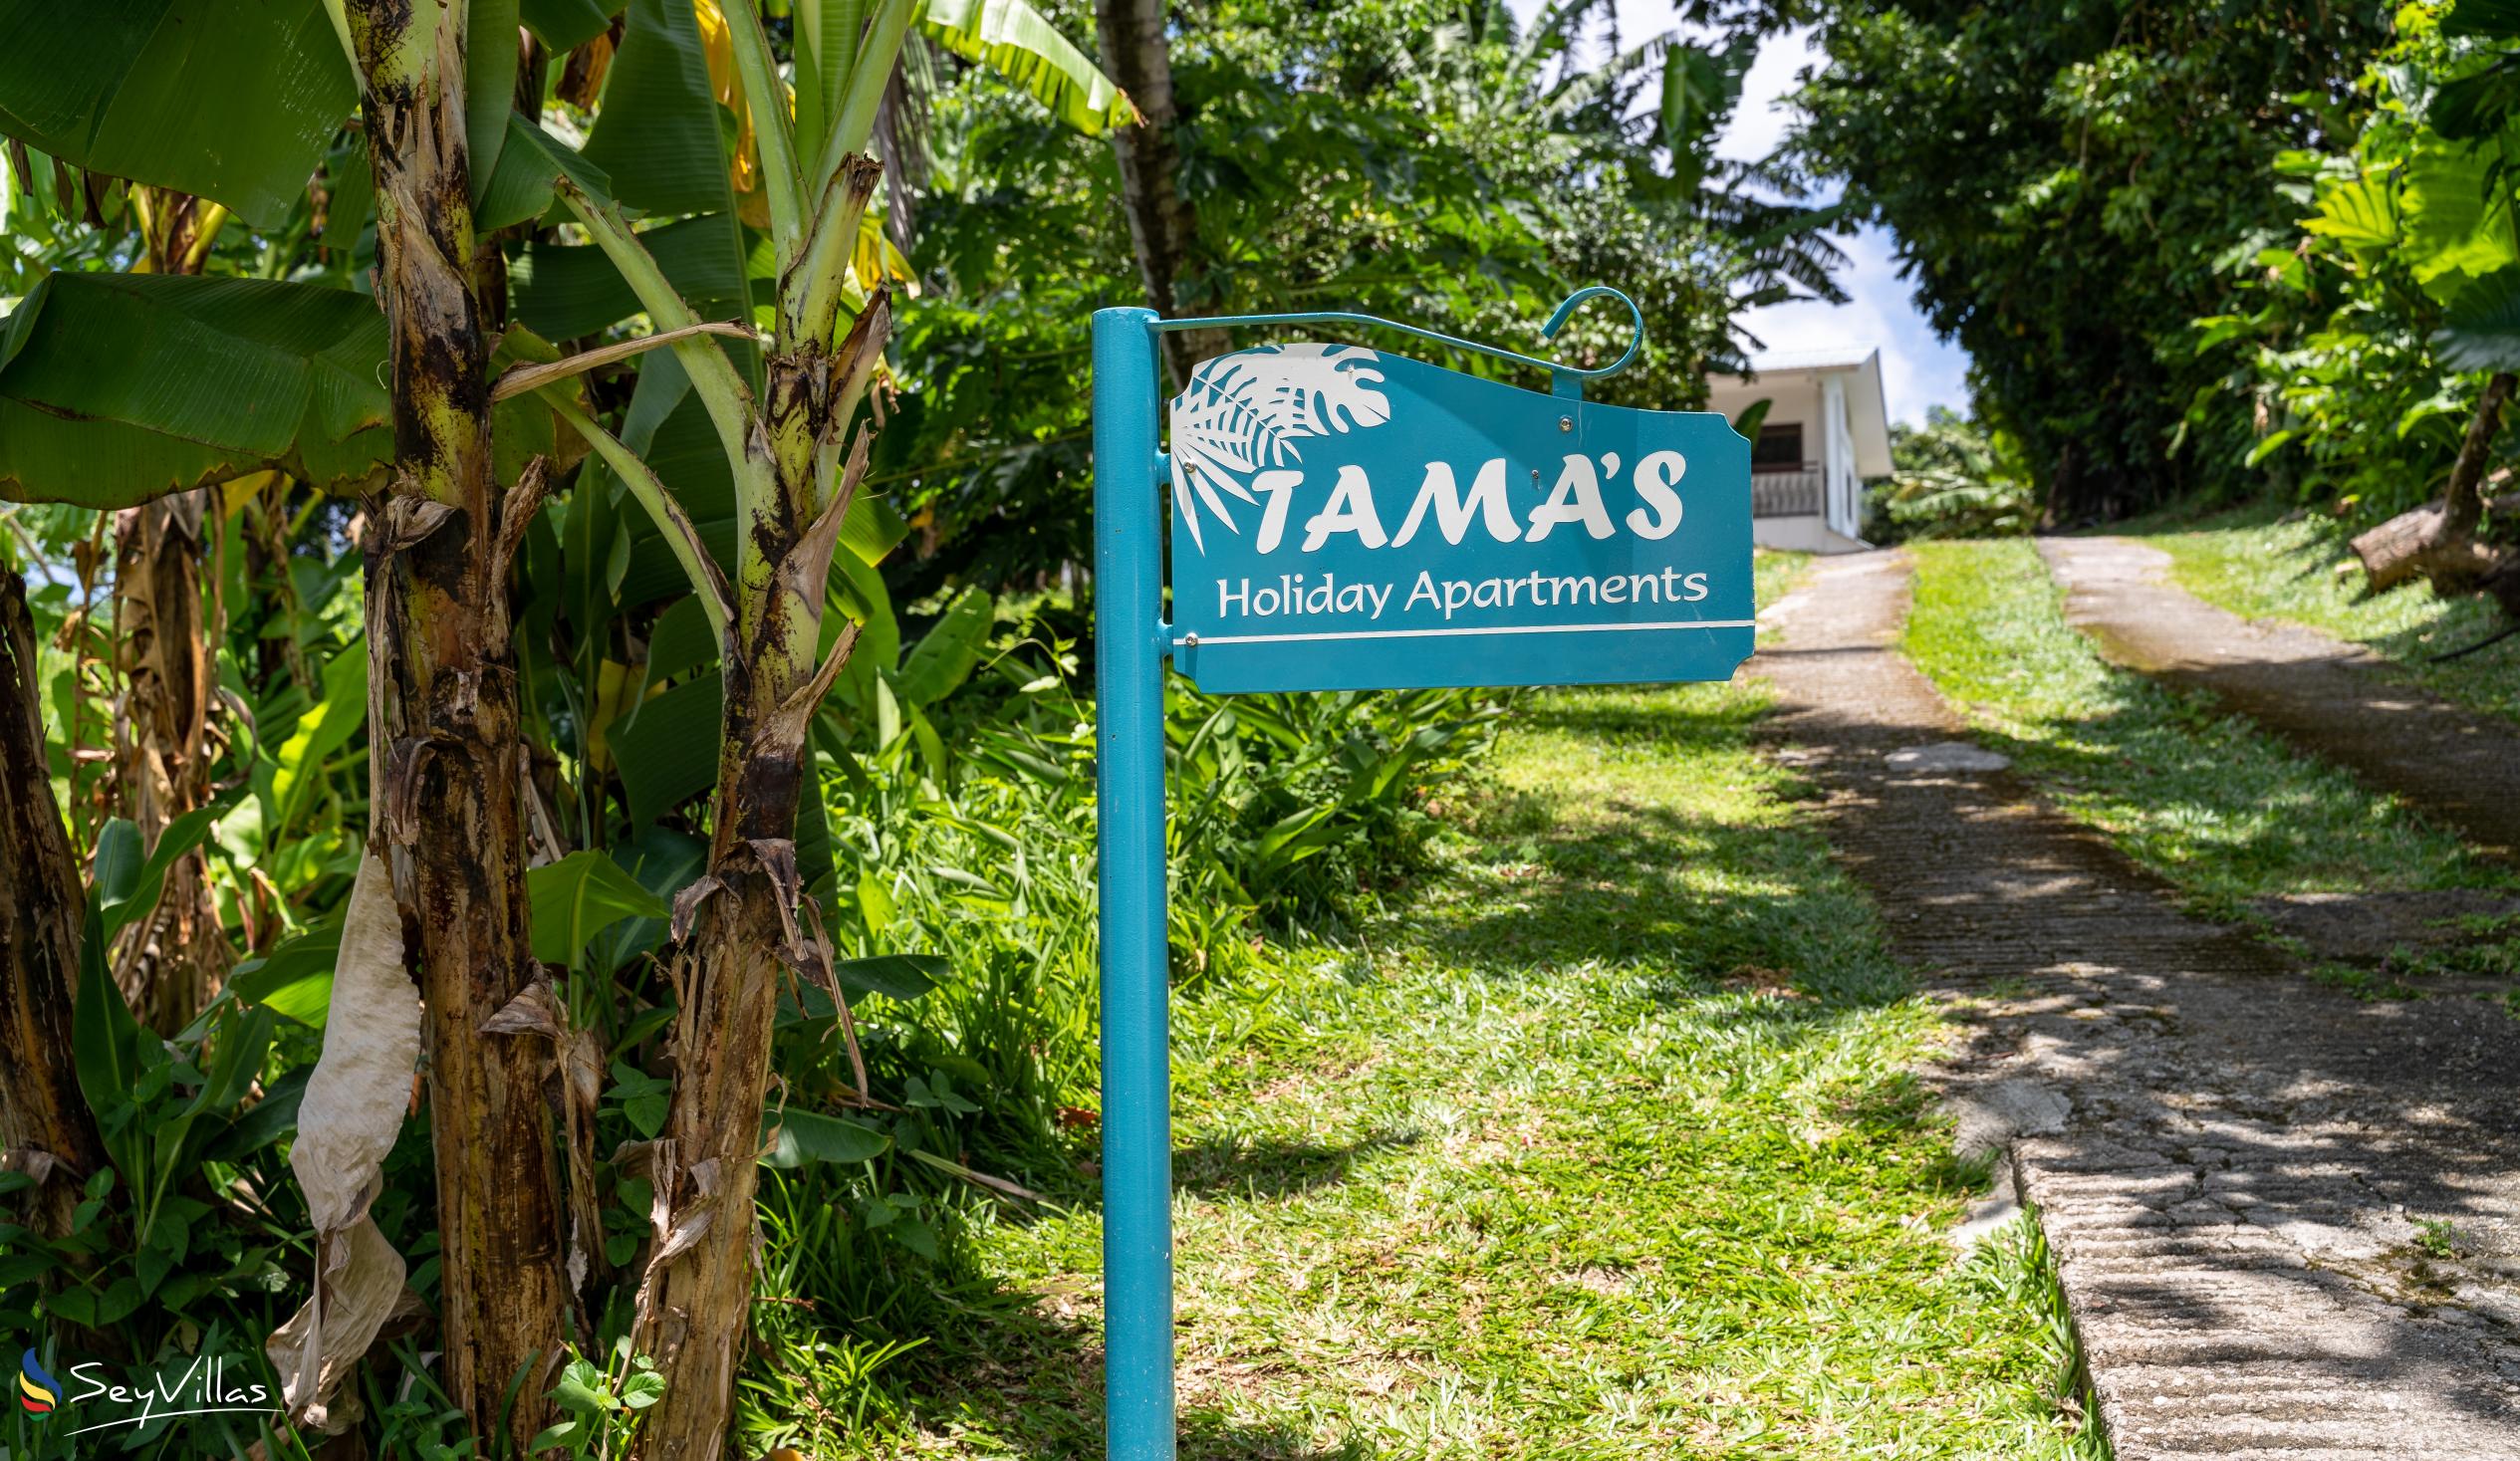 Foto 22: Tama's Holiday Apartments - Posizione - Mahé (Seychelles)